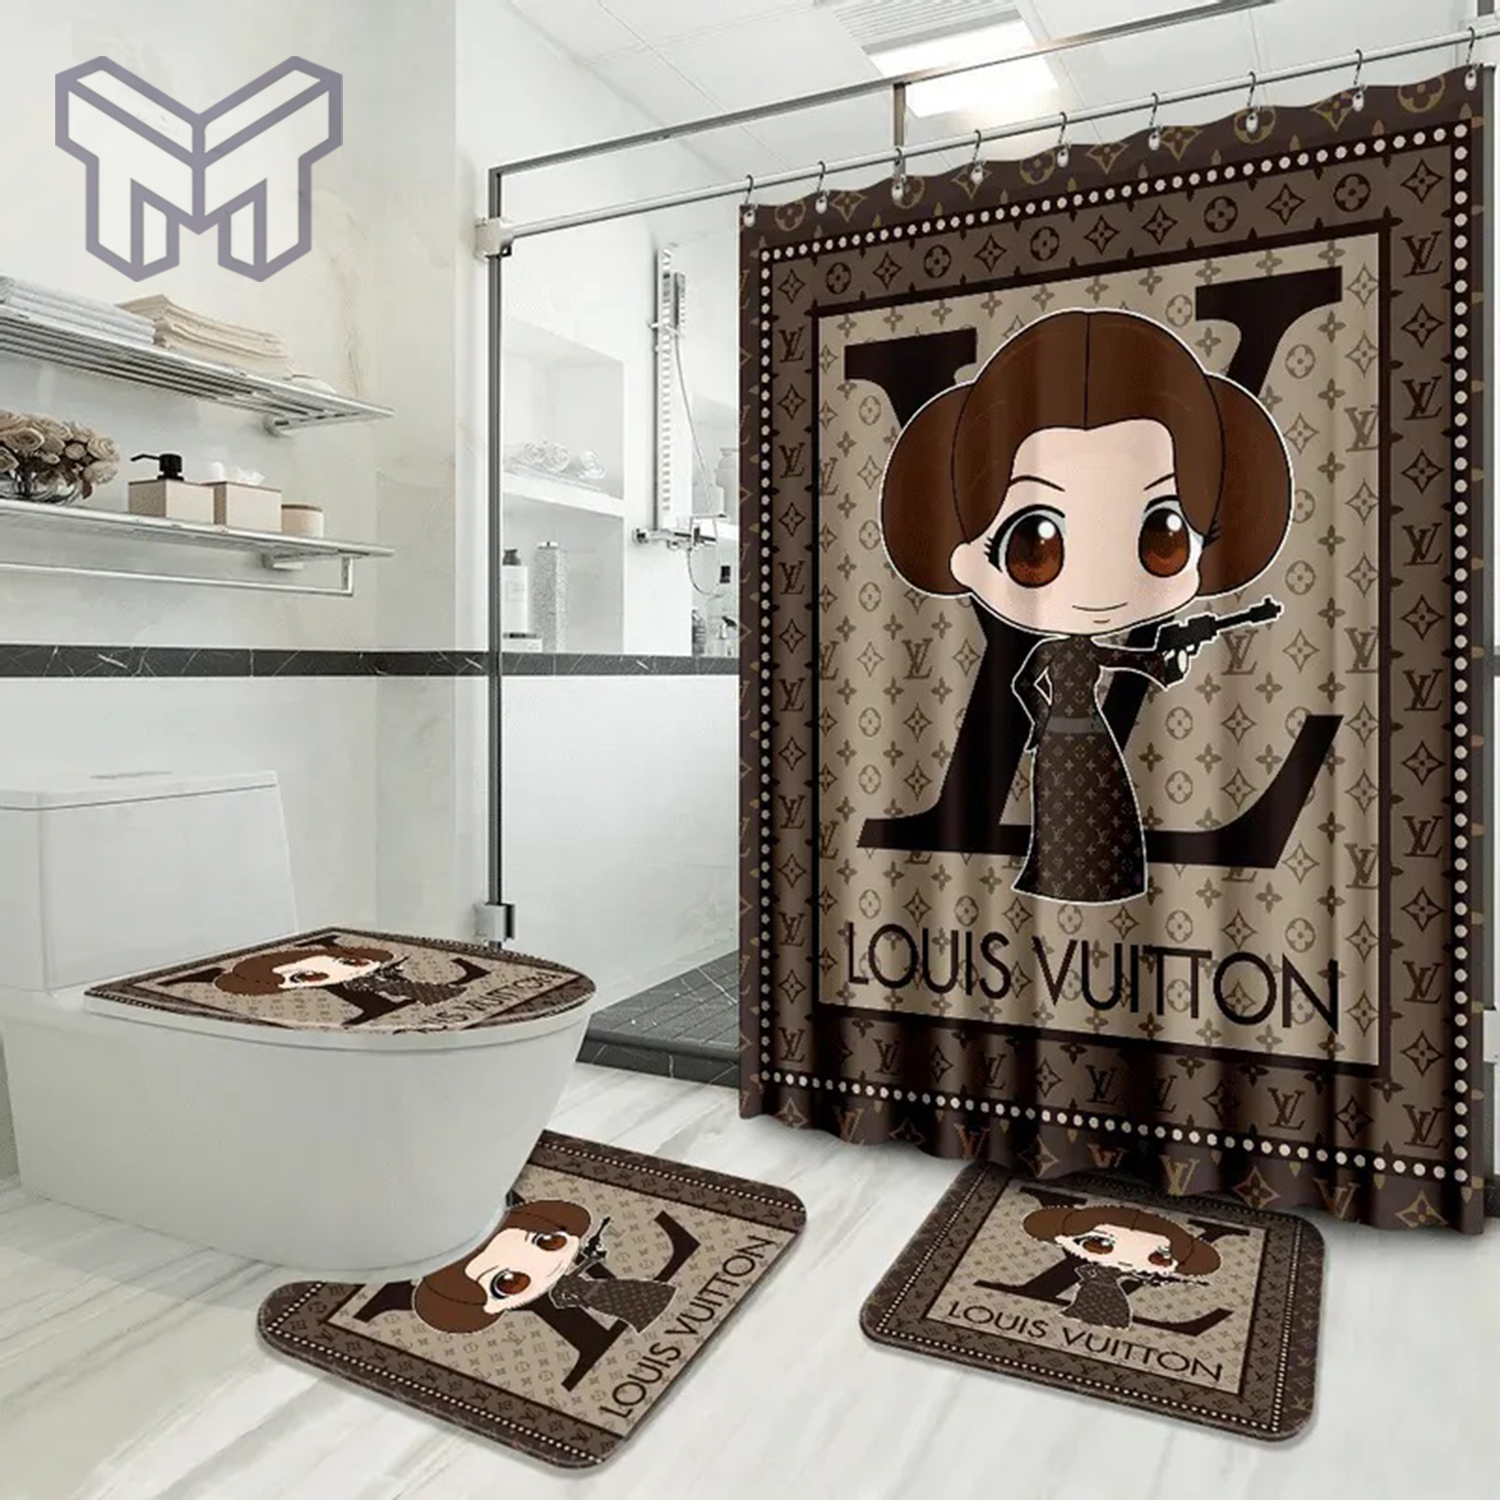 Louis vuitton bathroom set luxury shower curtain waterproof luxury brand  with logo louis vuitton 31